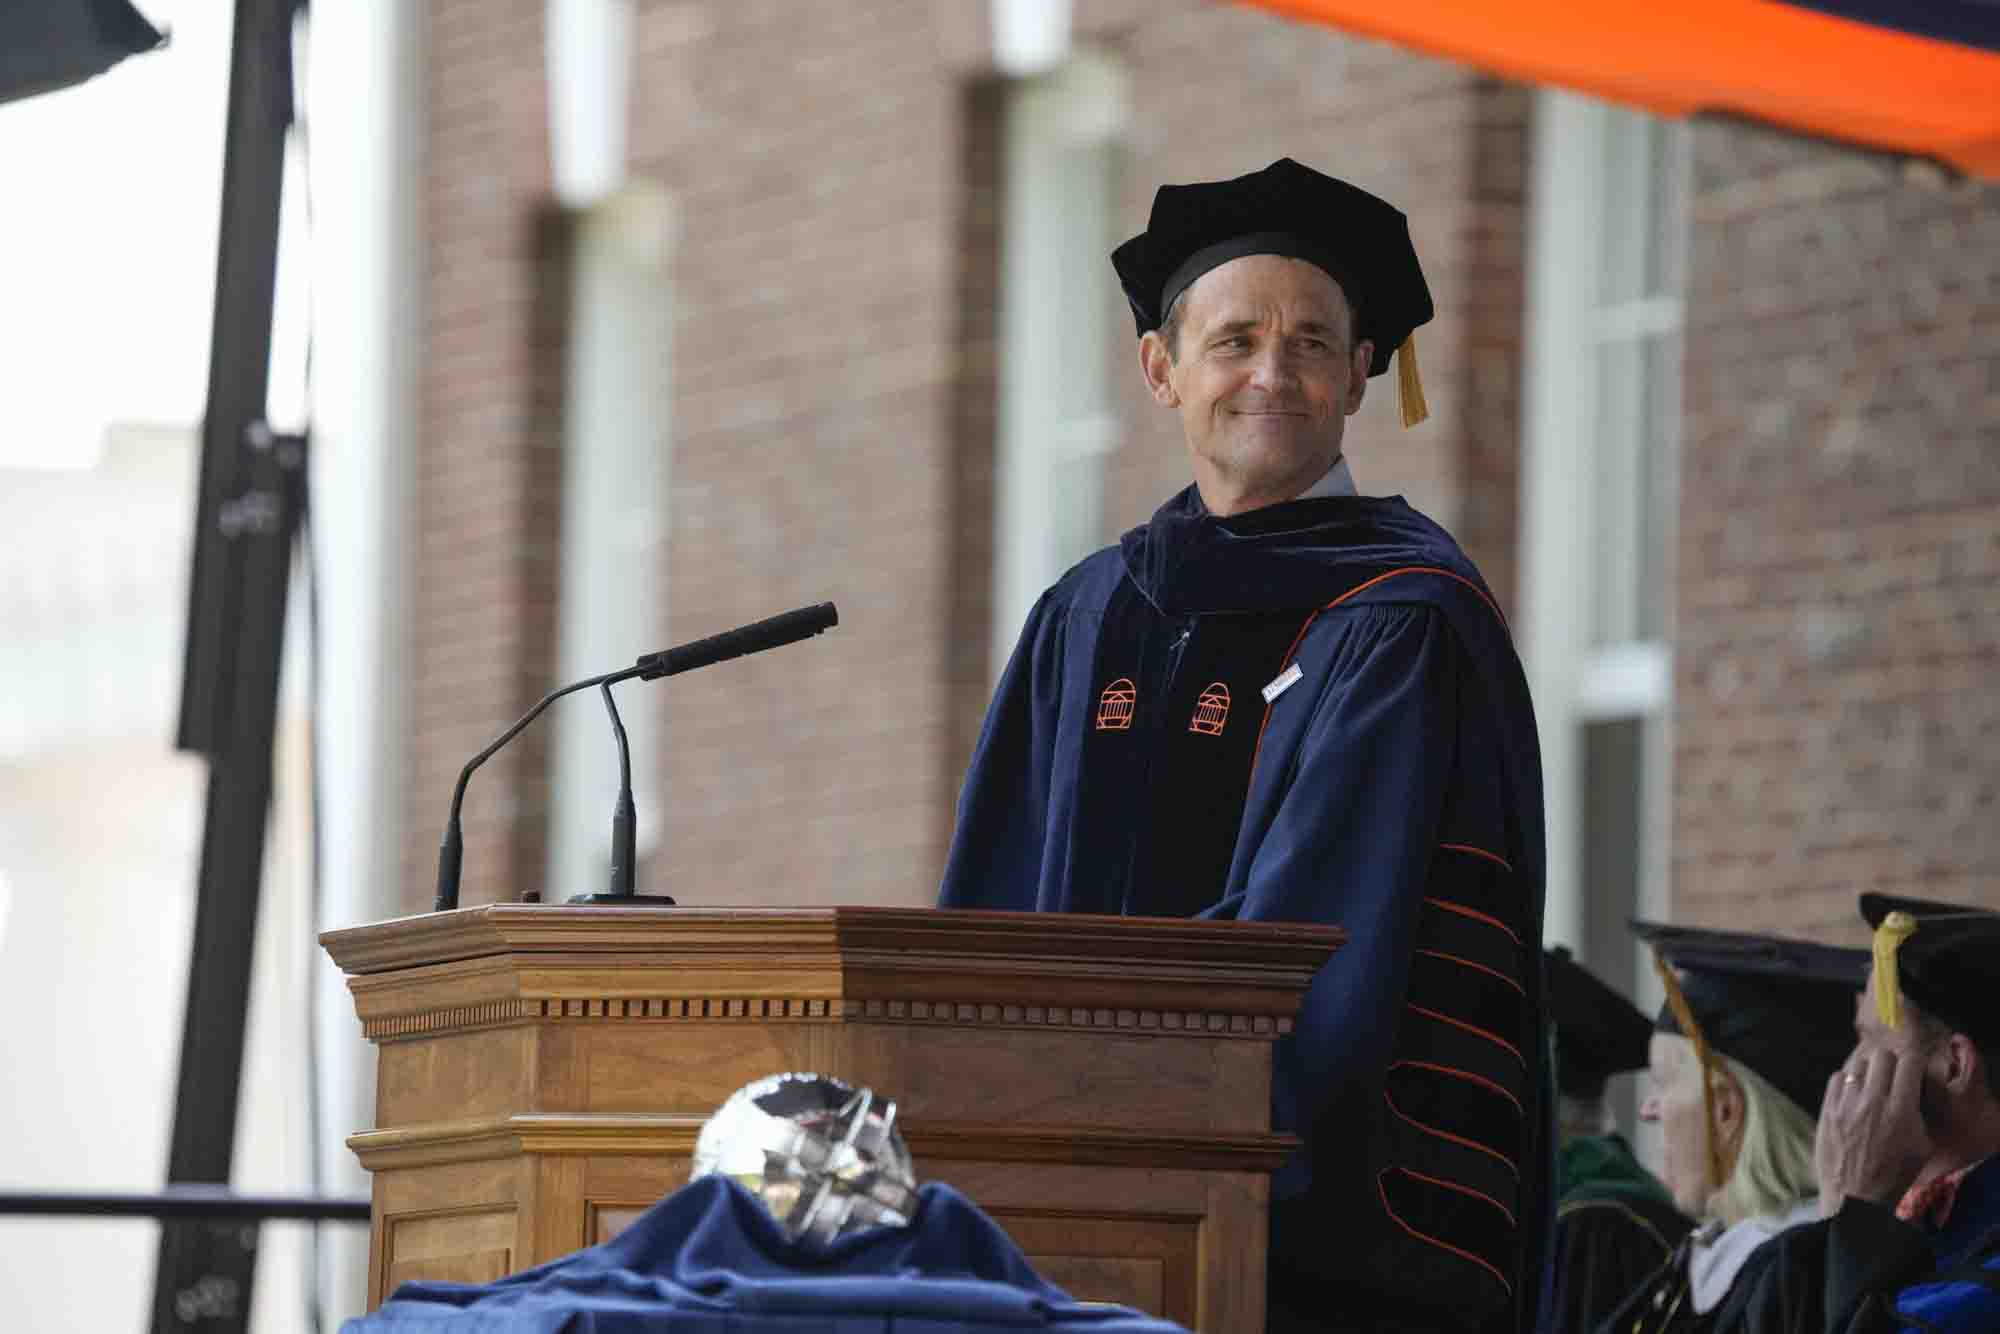 President Ryan at the podium addressing the graduates